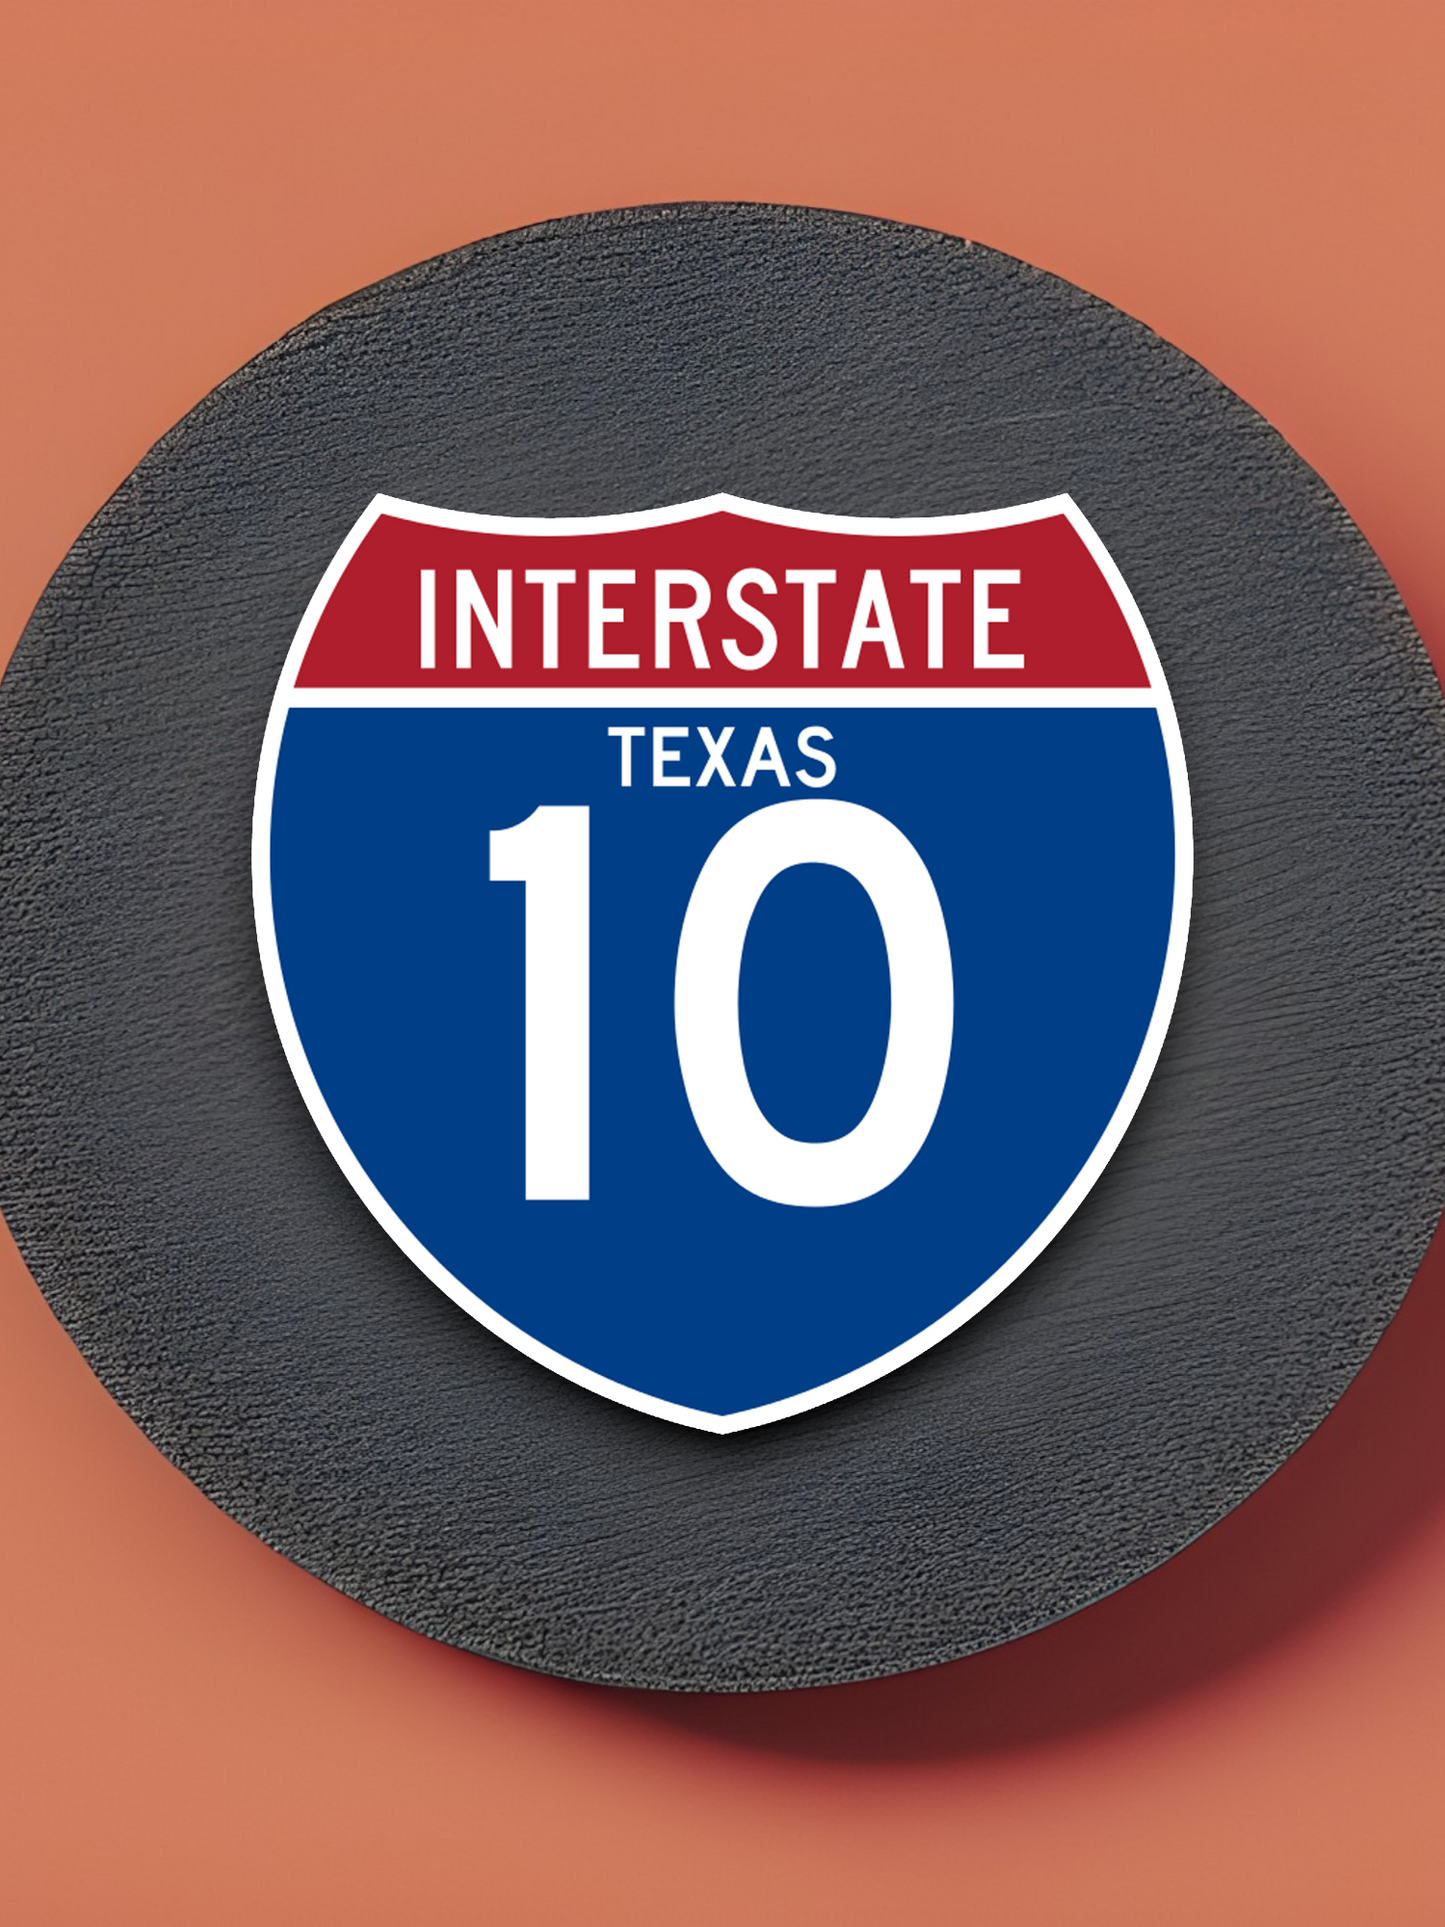 Interstate I-10 Texas - Road Sign Sticker